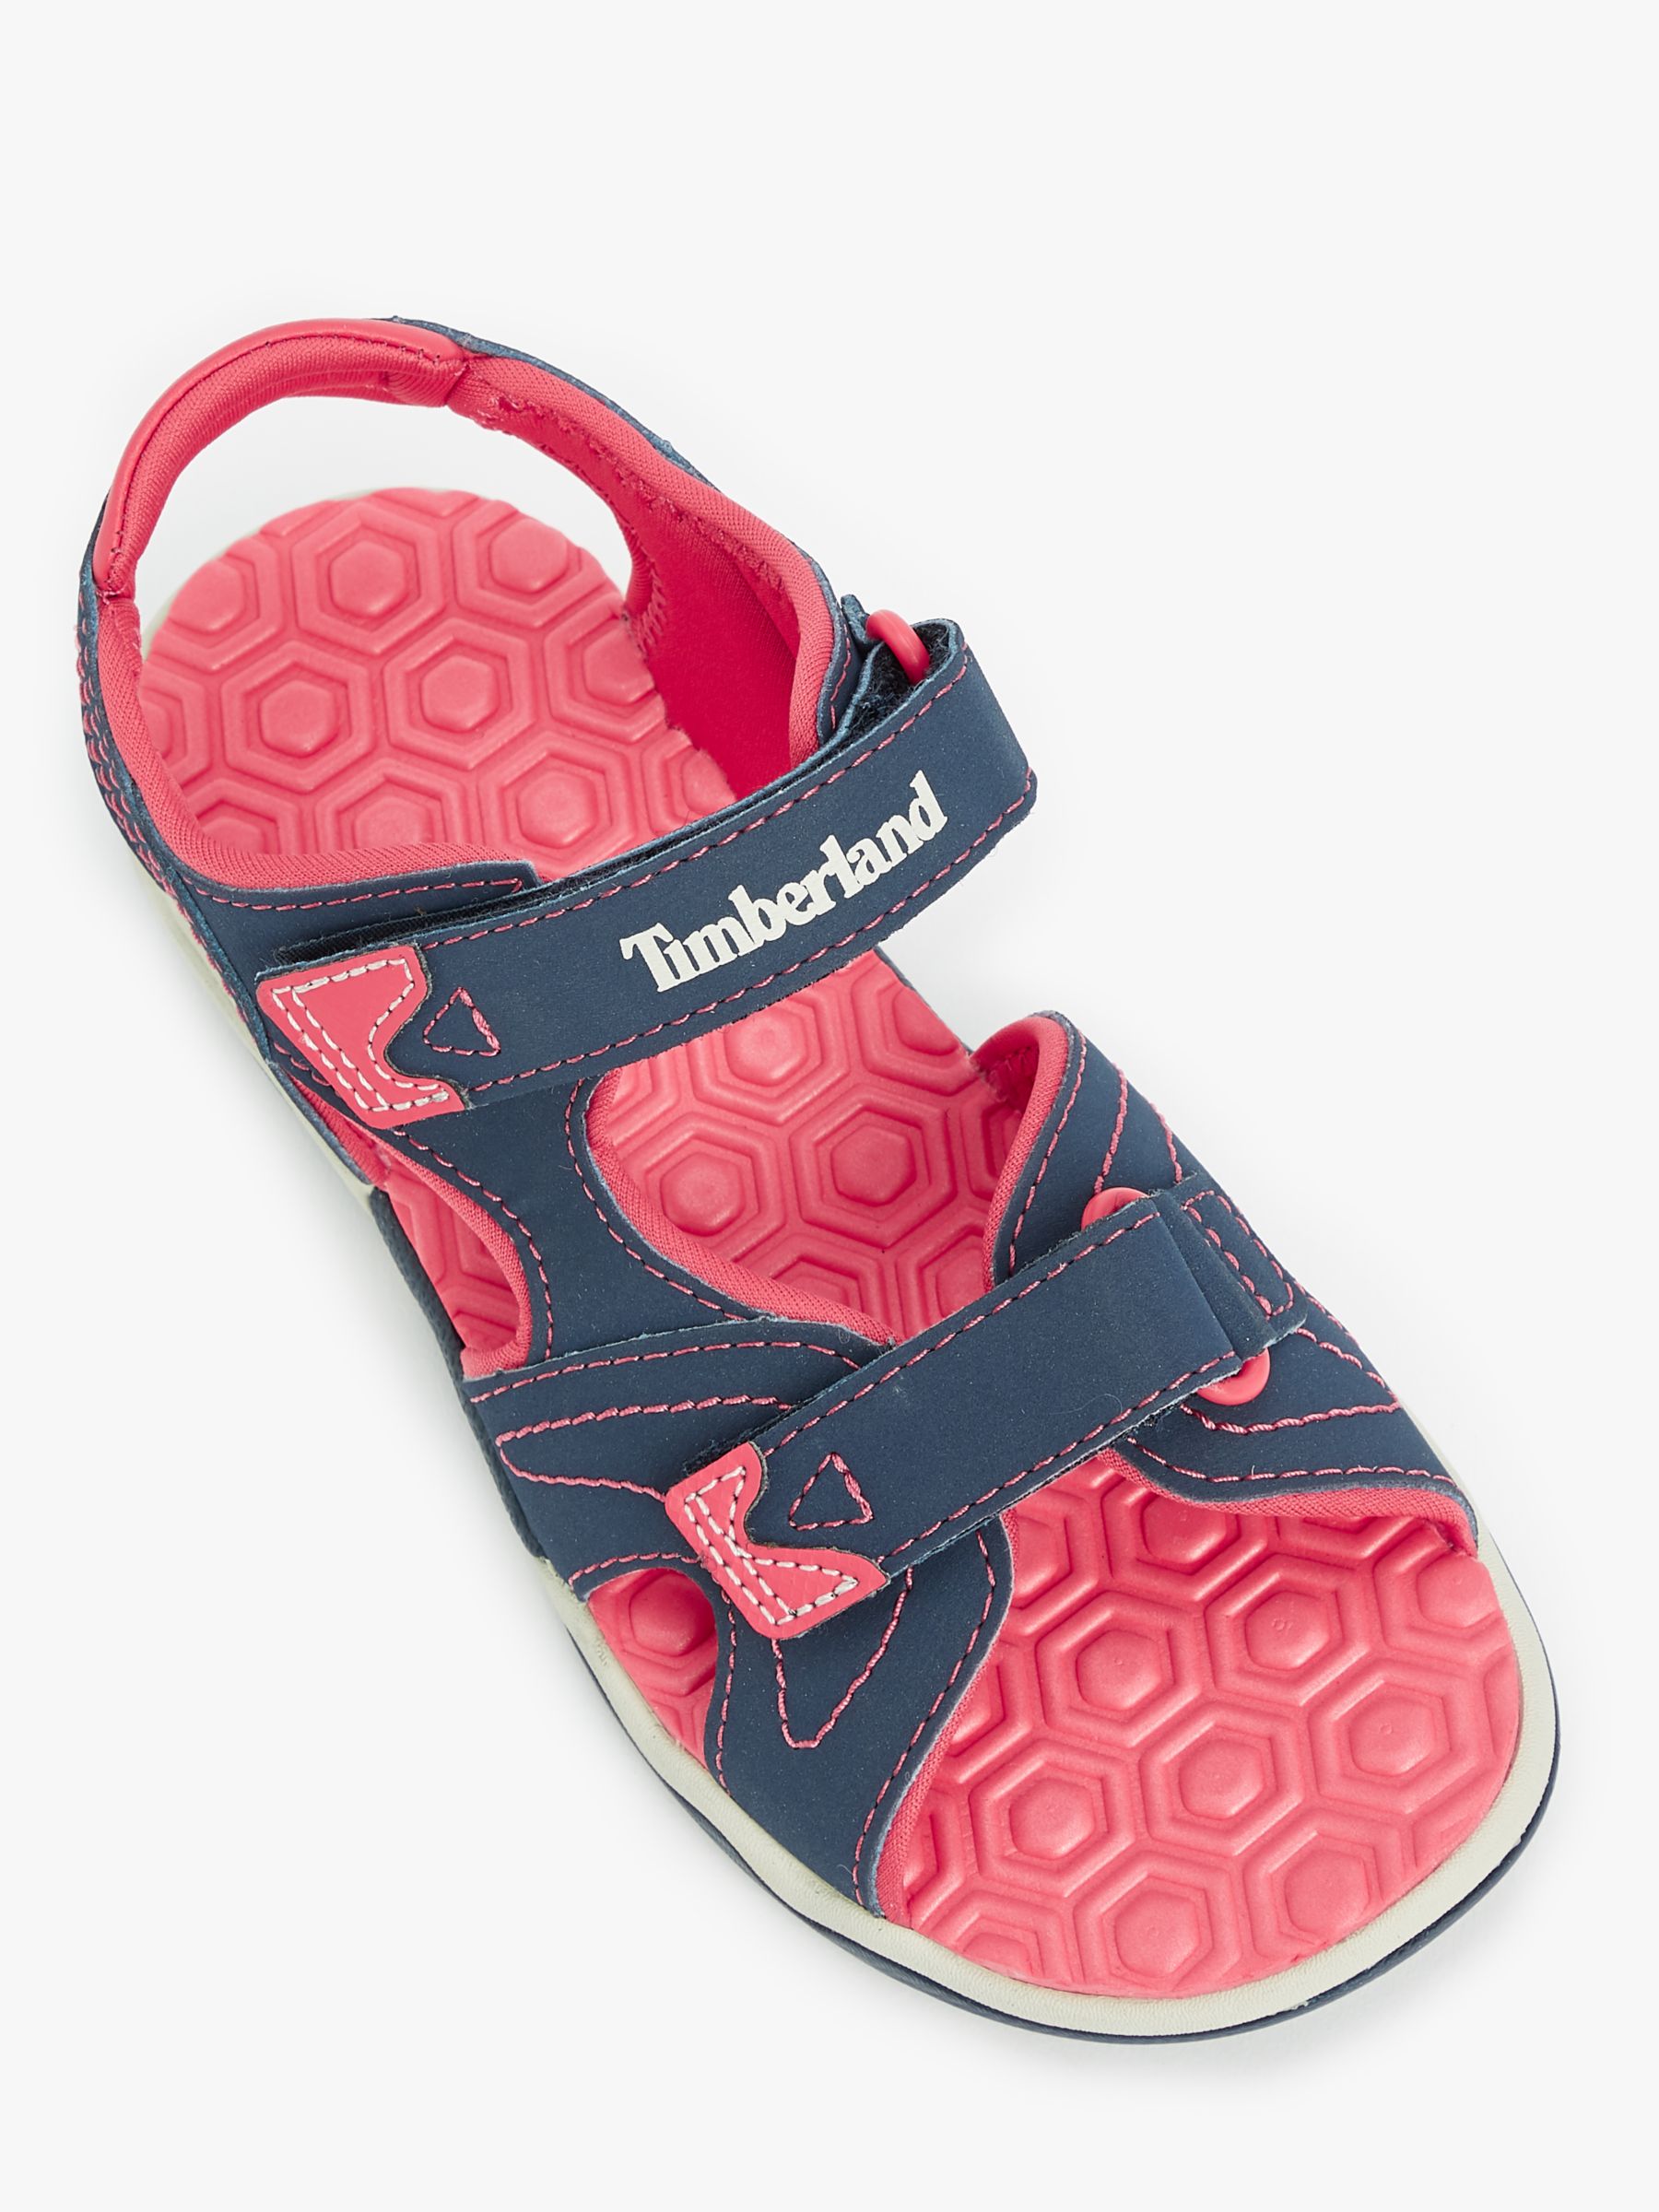 Timberland Children's Adventure Seeker Riptape Sandals, Pink/Navy, 29